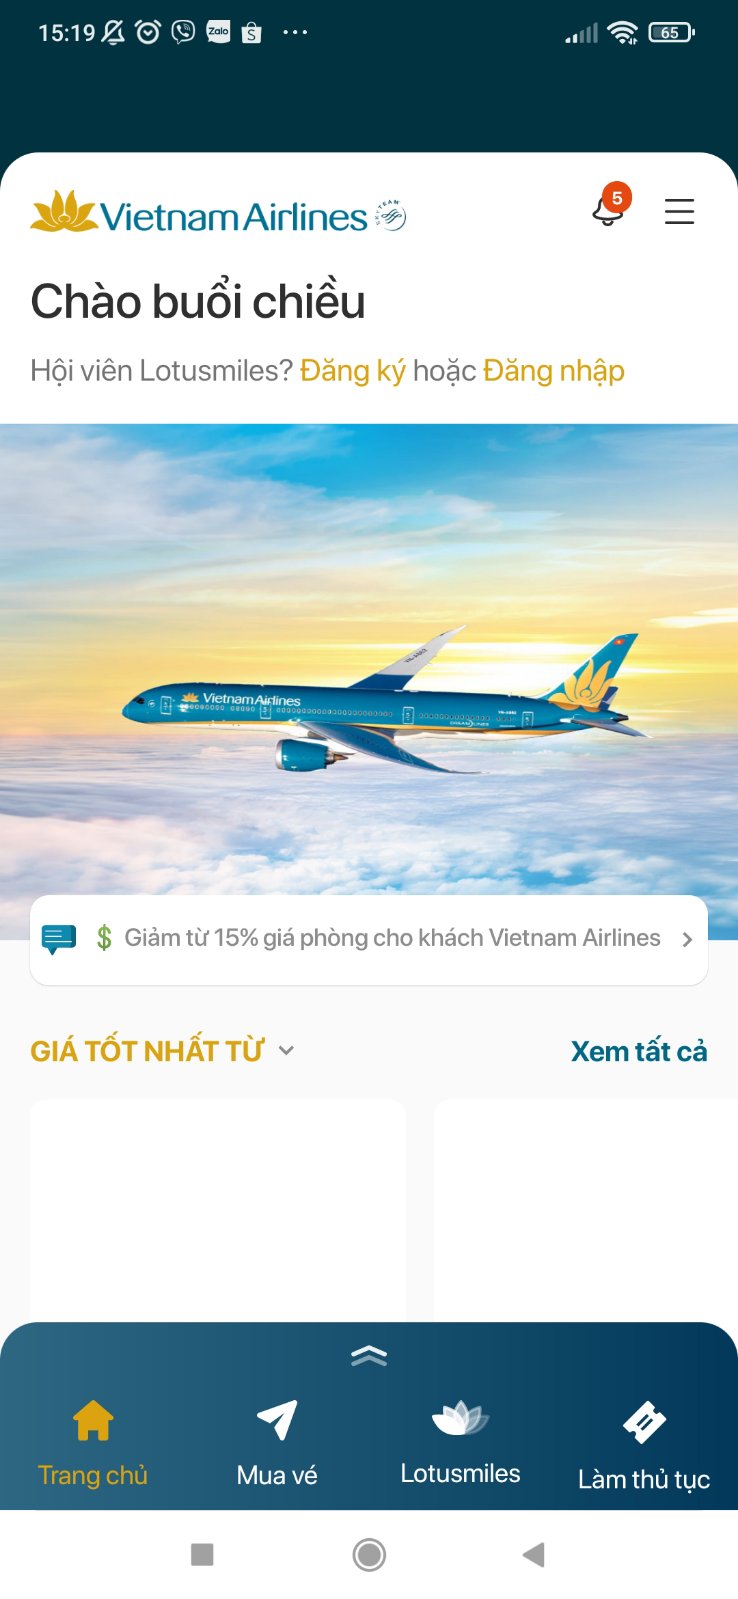 vietnam airlines group khuyen nghi hanh khach lam thu tuc truc tuyen dip cao diem tet hinh 3